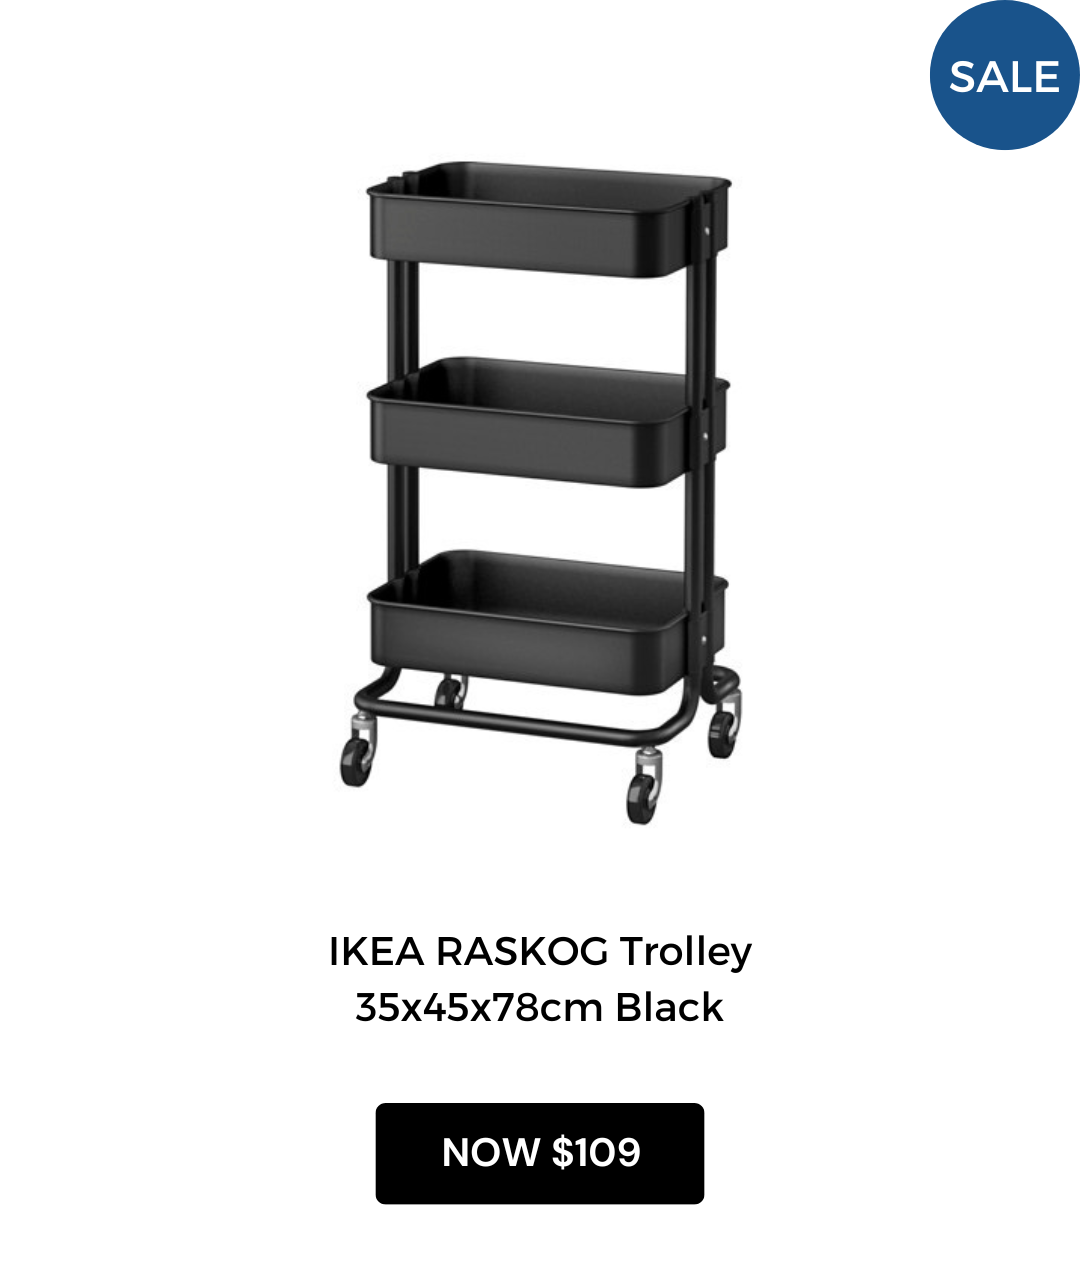 IKEA RASKOG Trolley 35x45x78cm Black